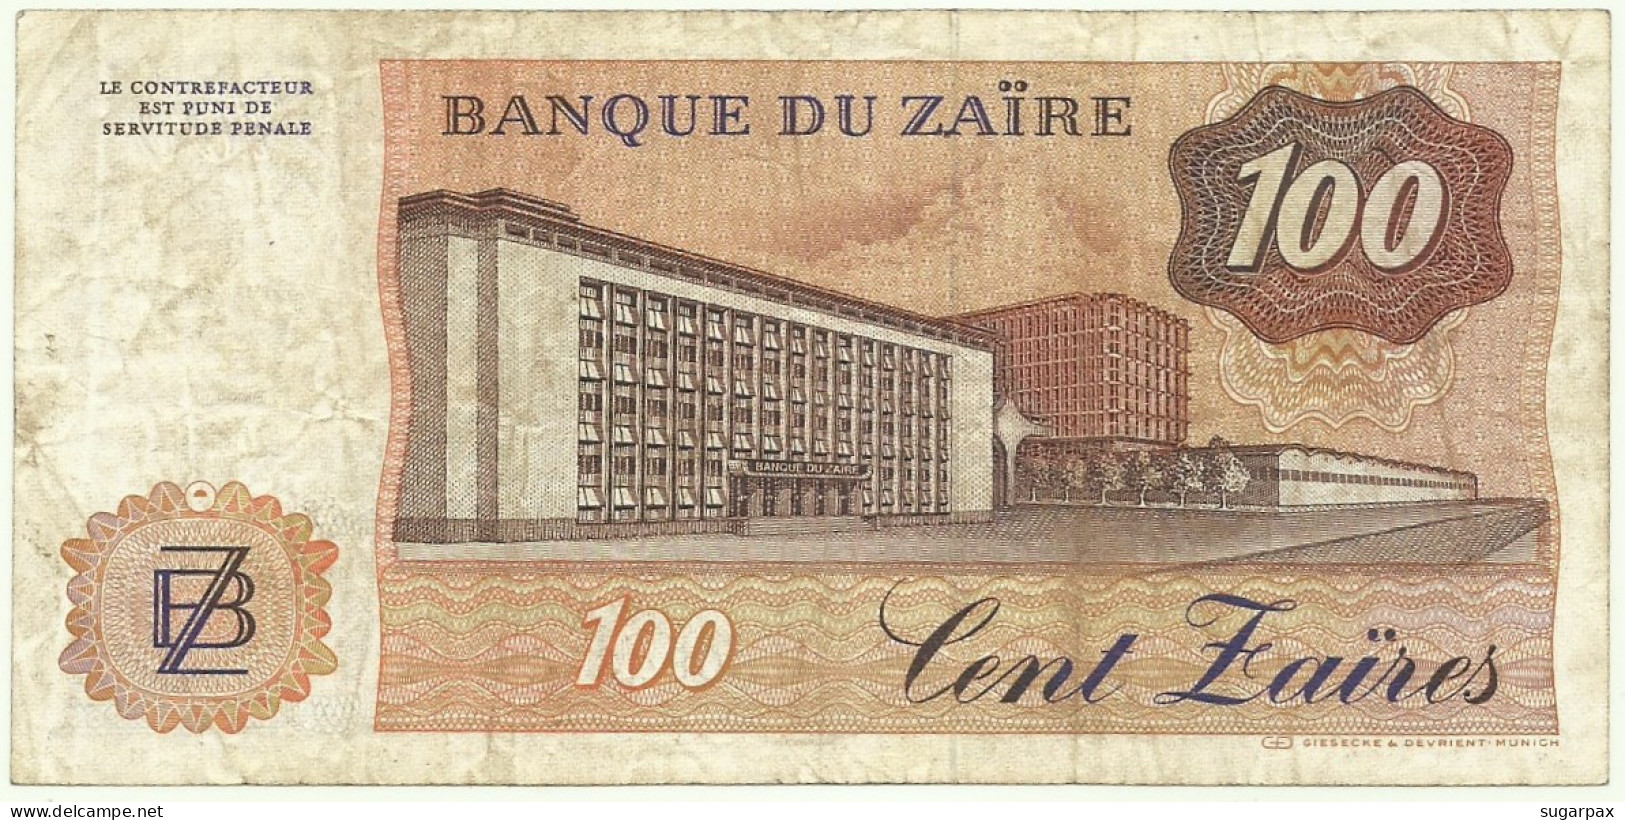 Zaïre - 100 Zaïres - 30.6.1983 - Pick 29.a - Sign. 6 - Mobutu - Zaïre